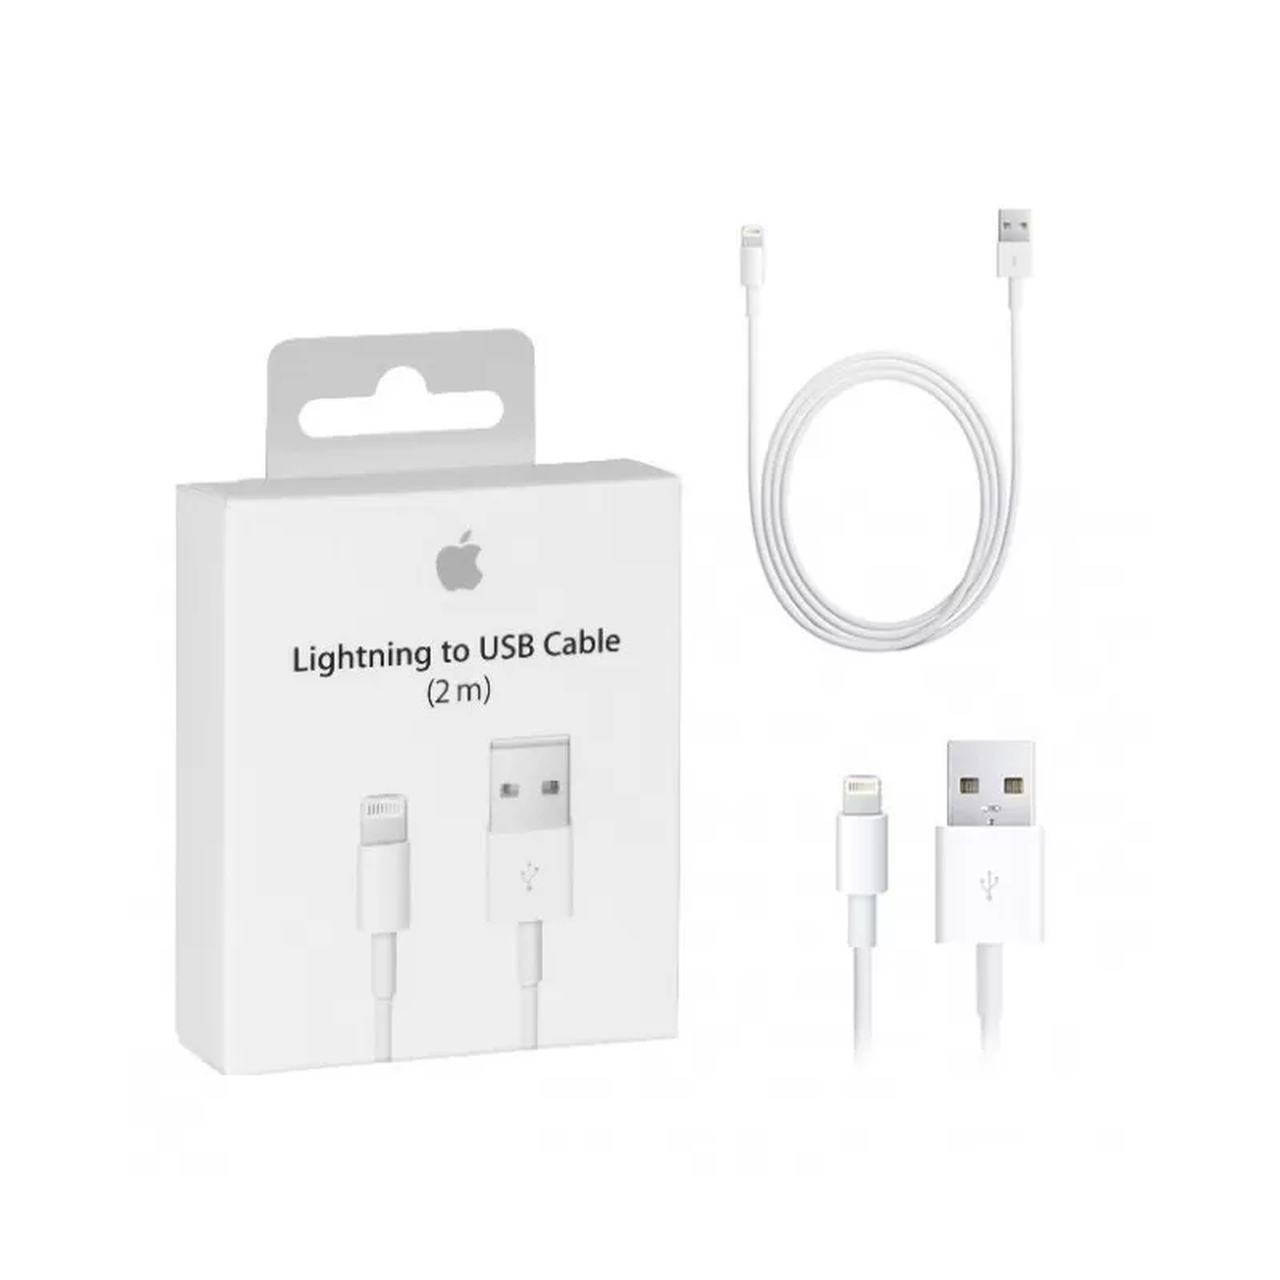 Apple Lightning USB Cable